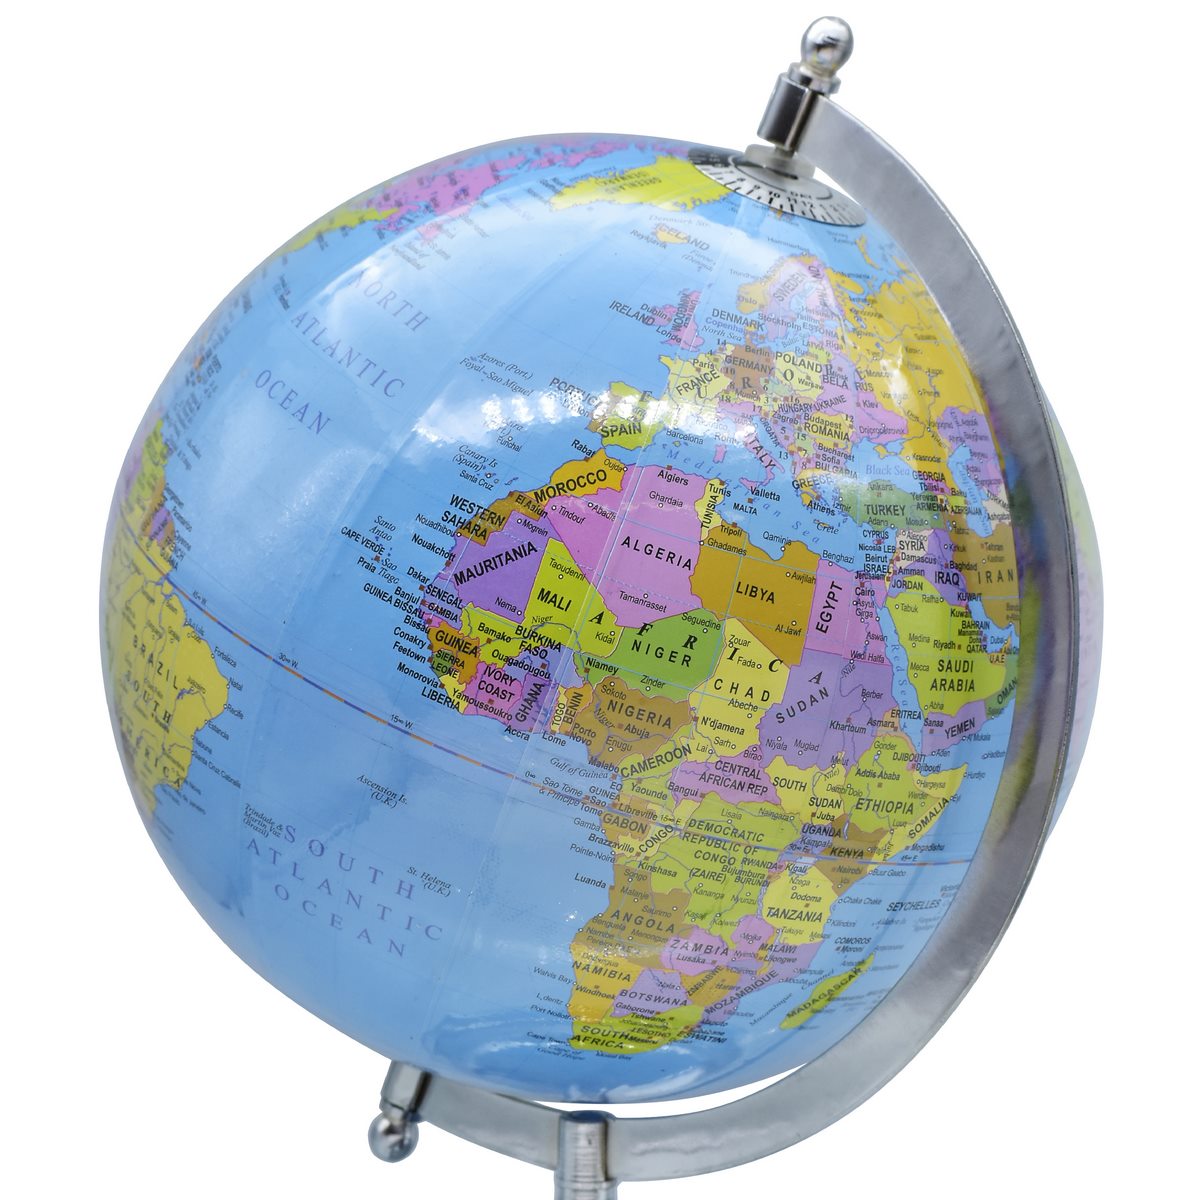 jags-mumbai World Globe World Globe Educational Blue Silver Base 8 Inch